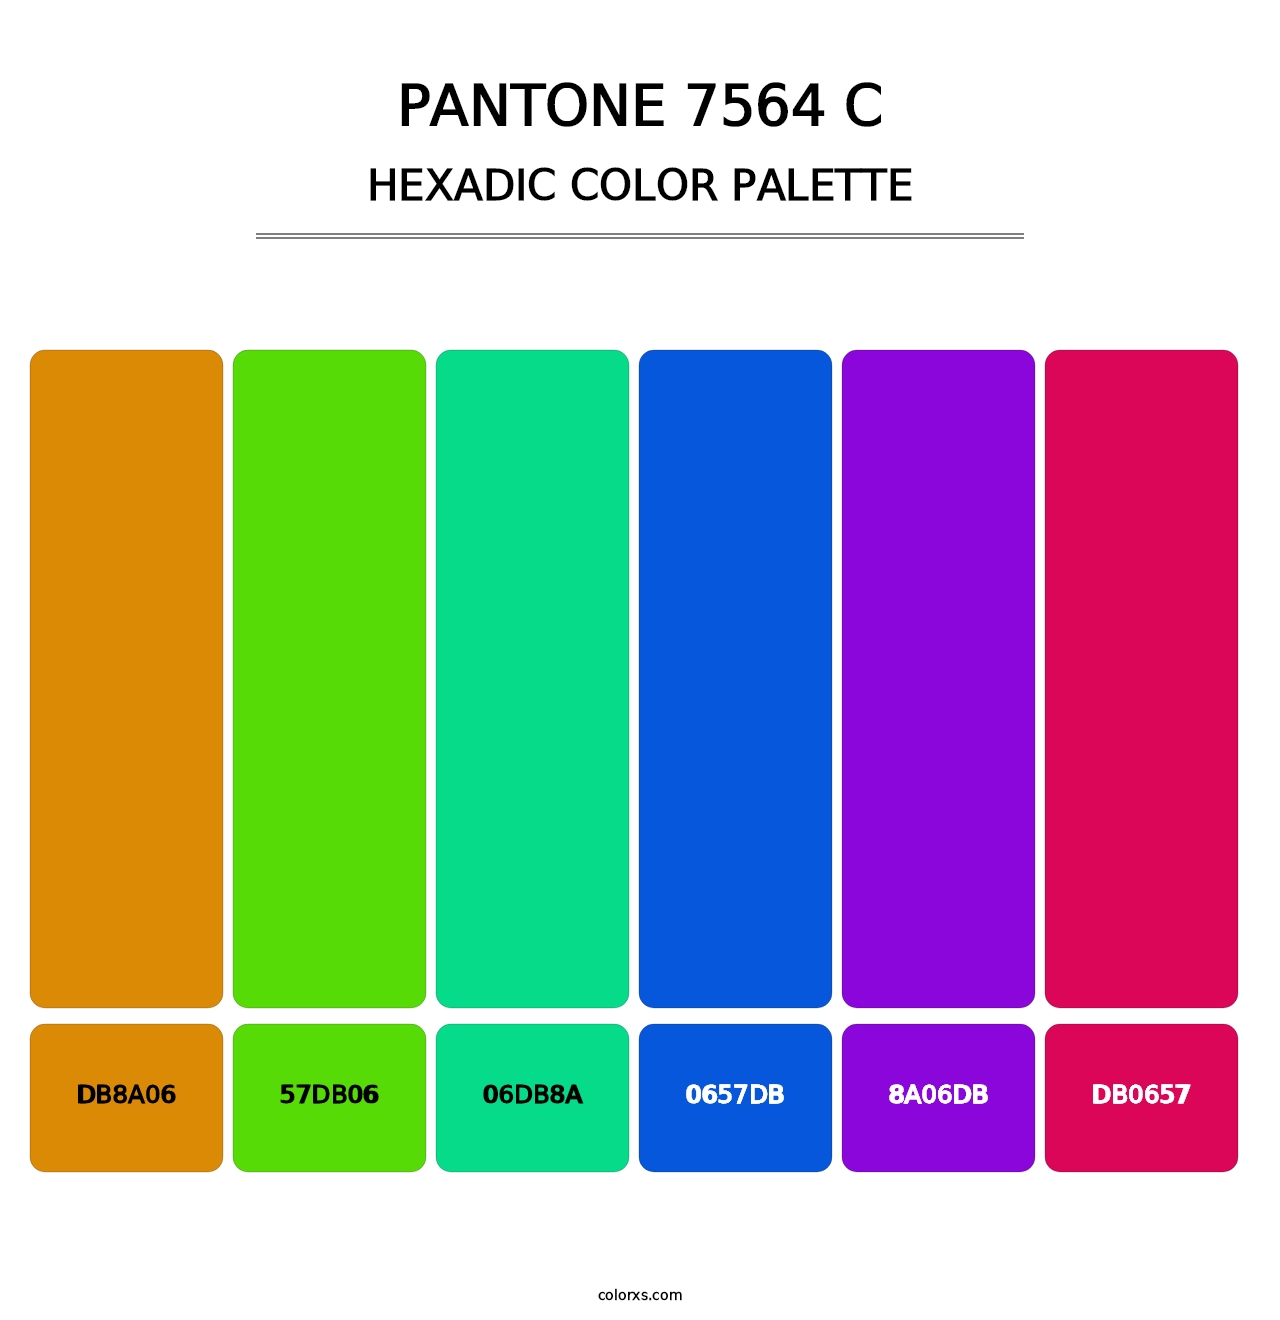 PANTONE 7564 C - Hexadic Color Palette